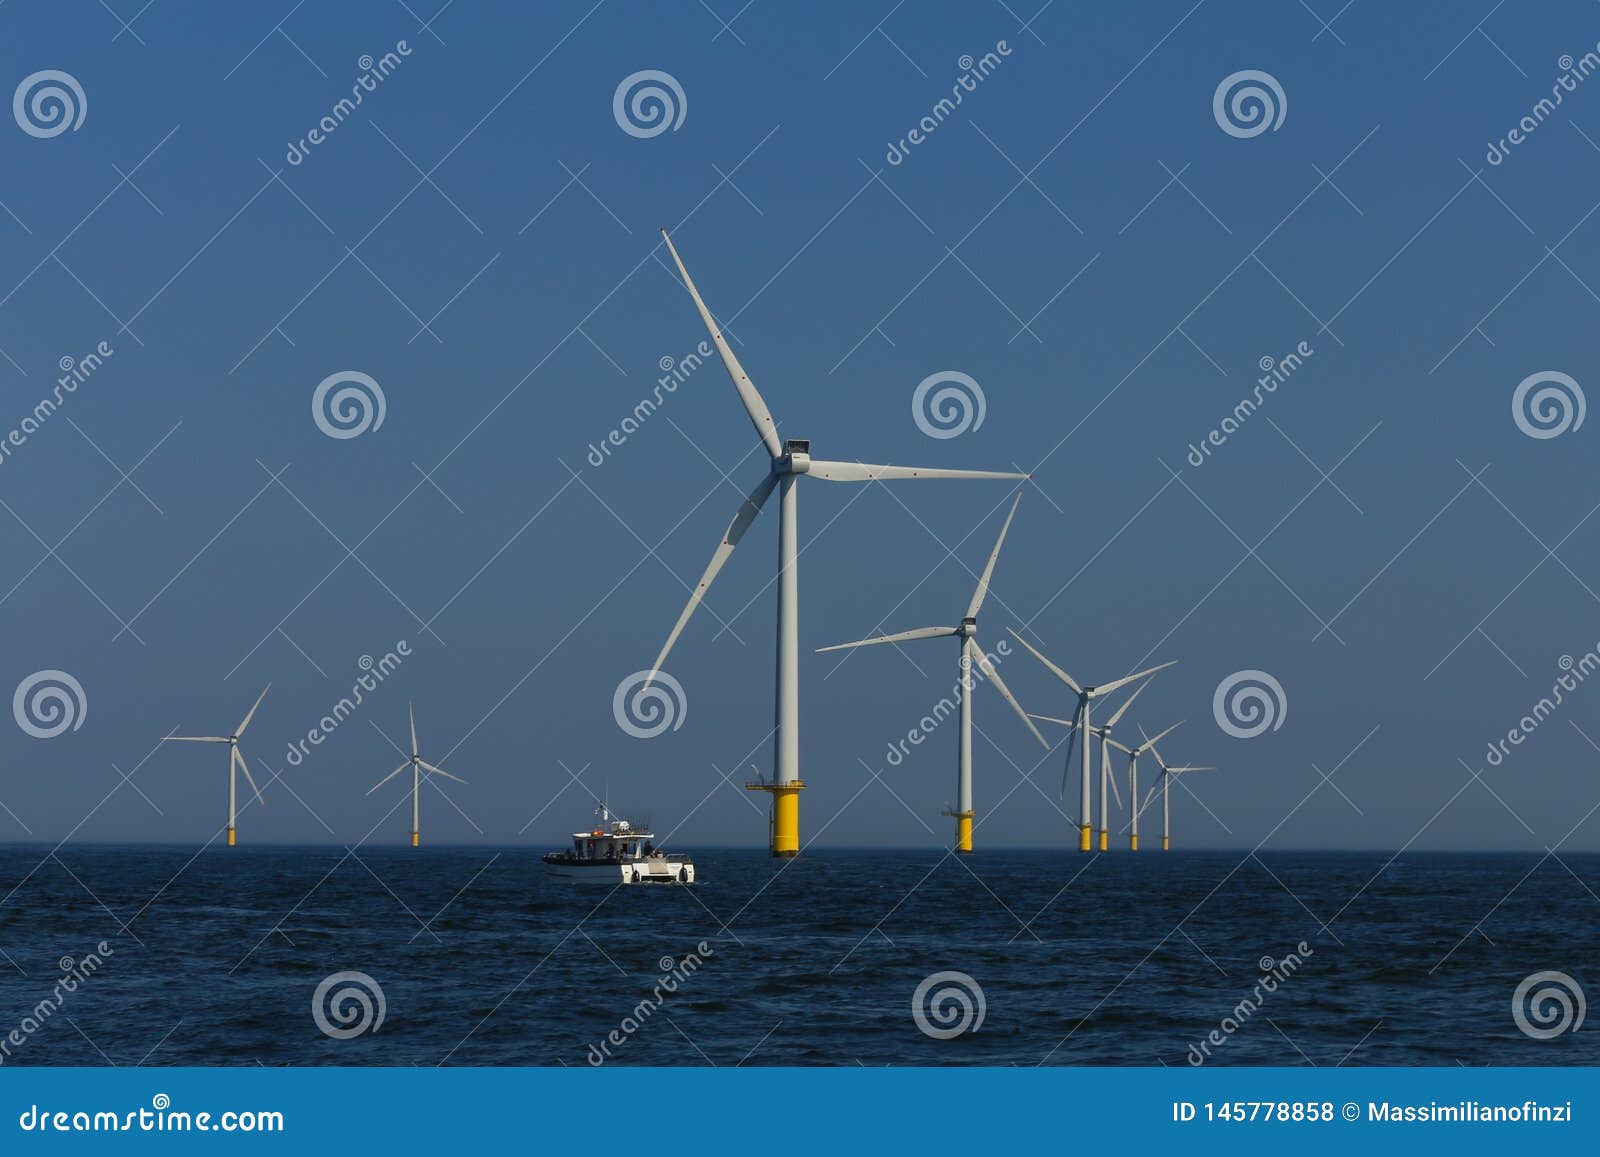 offshore platform windmills of rampion windfarm off the coast of brighton, sussex, uk